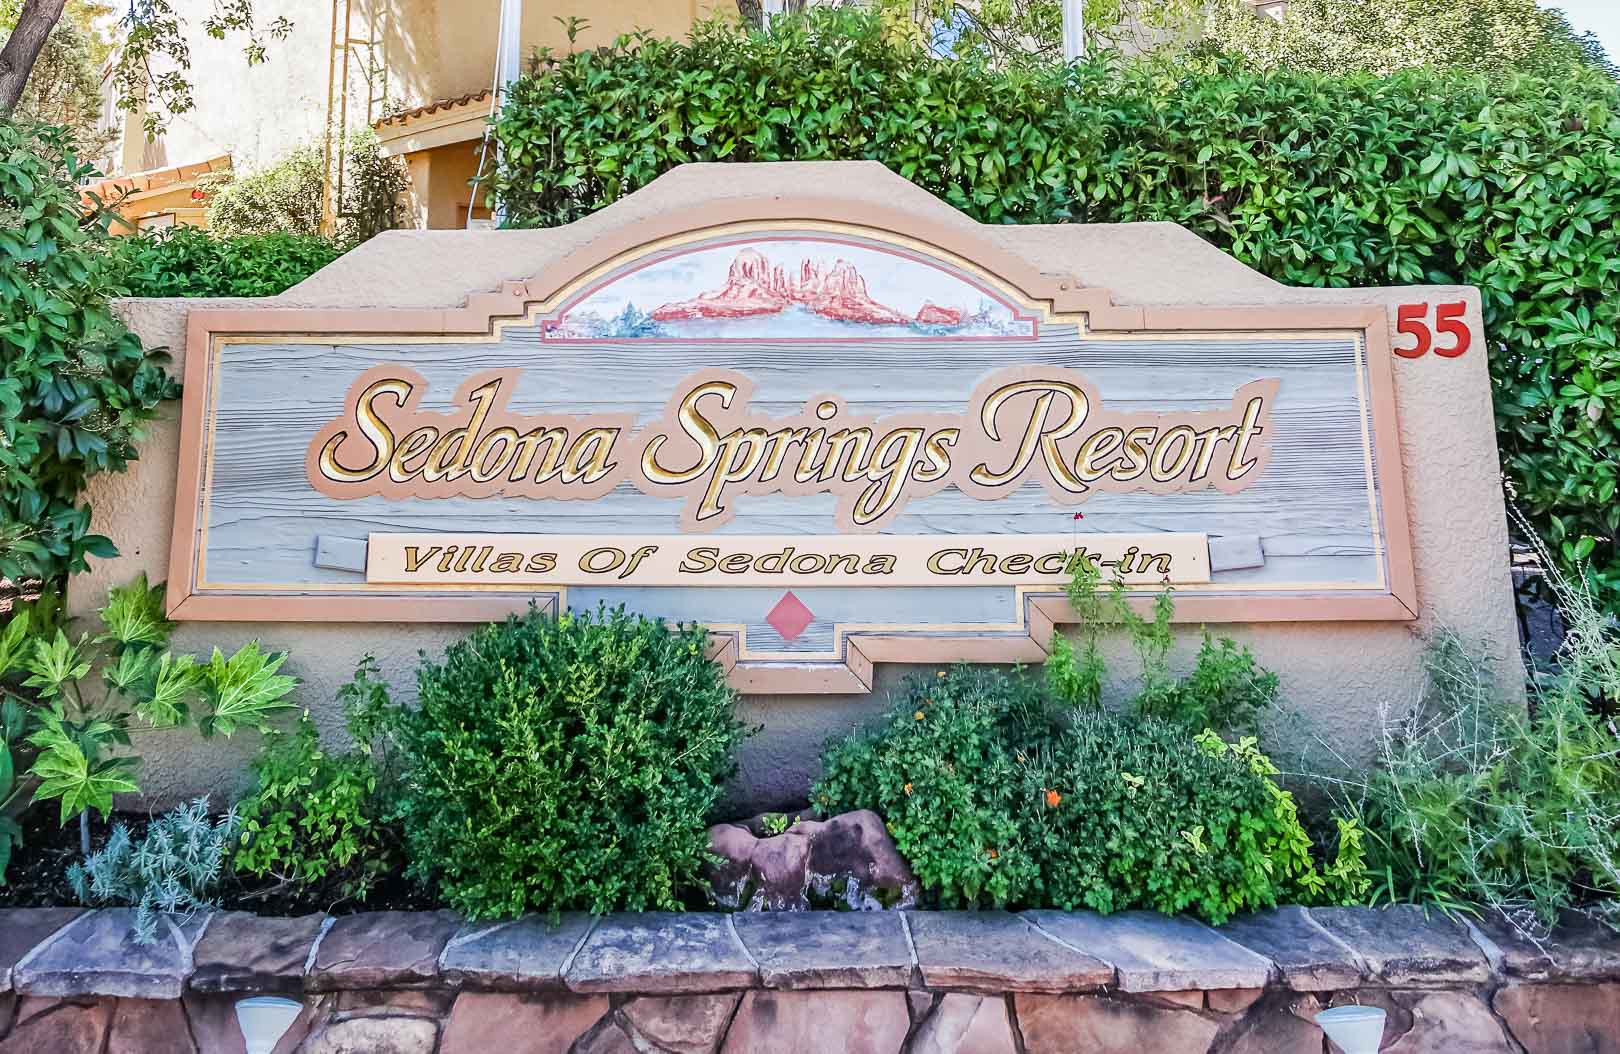 A resort signage of VRI's Sedona Springs Resort in Sedona, Arizona.